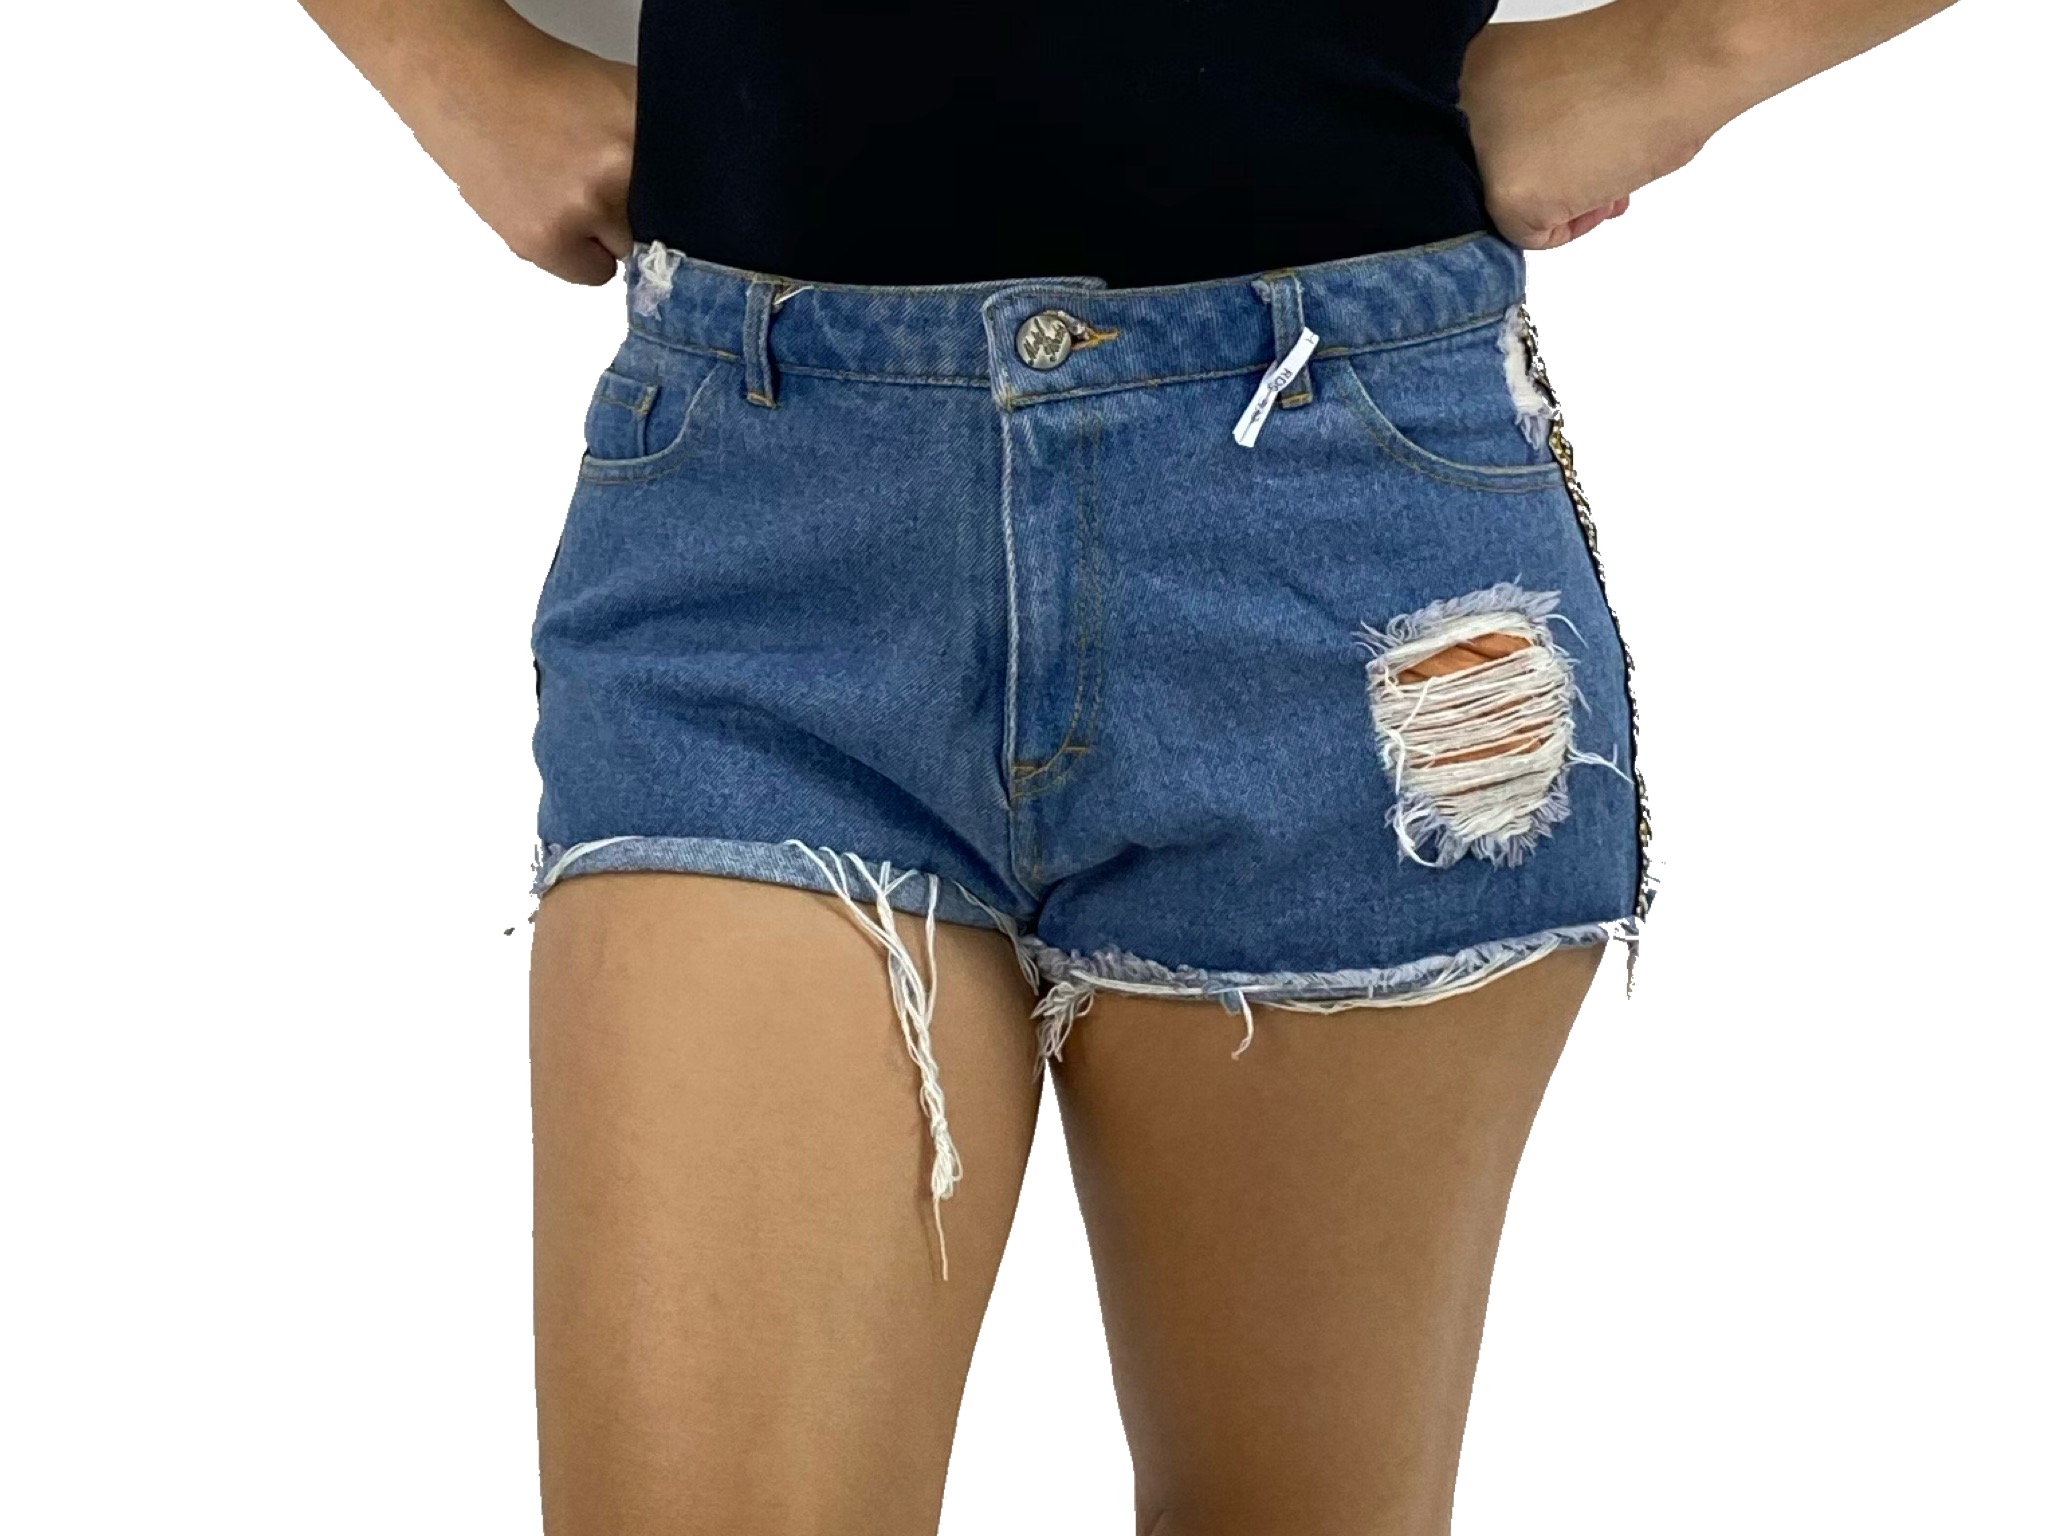 Pantalon Corto Mujer Jean Roto Detalles Cinta Colorida «Motel Rocks» Dto Store